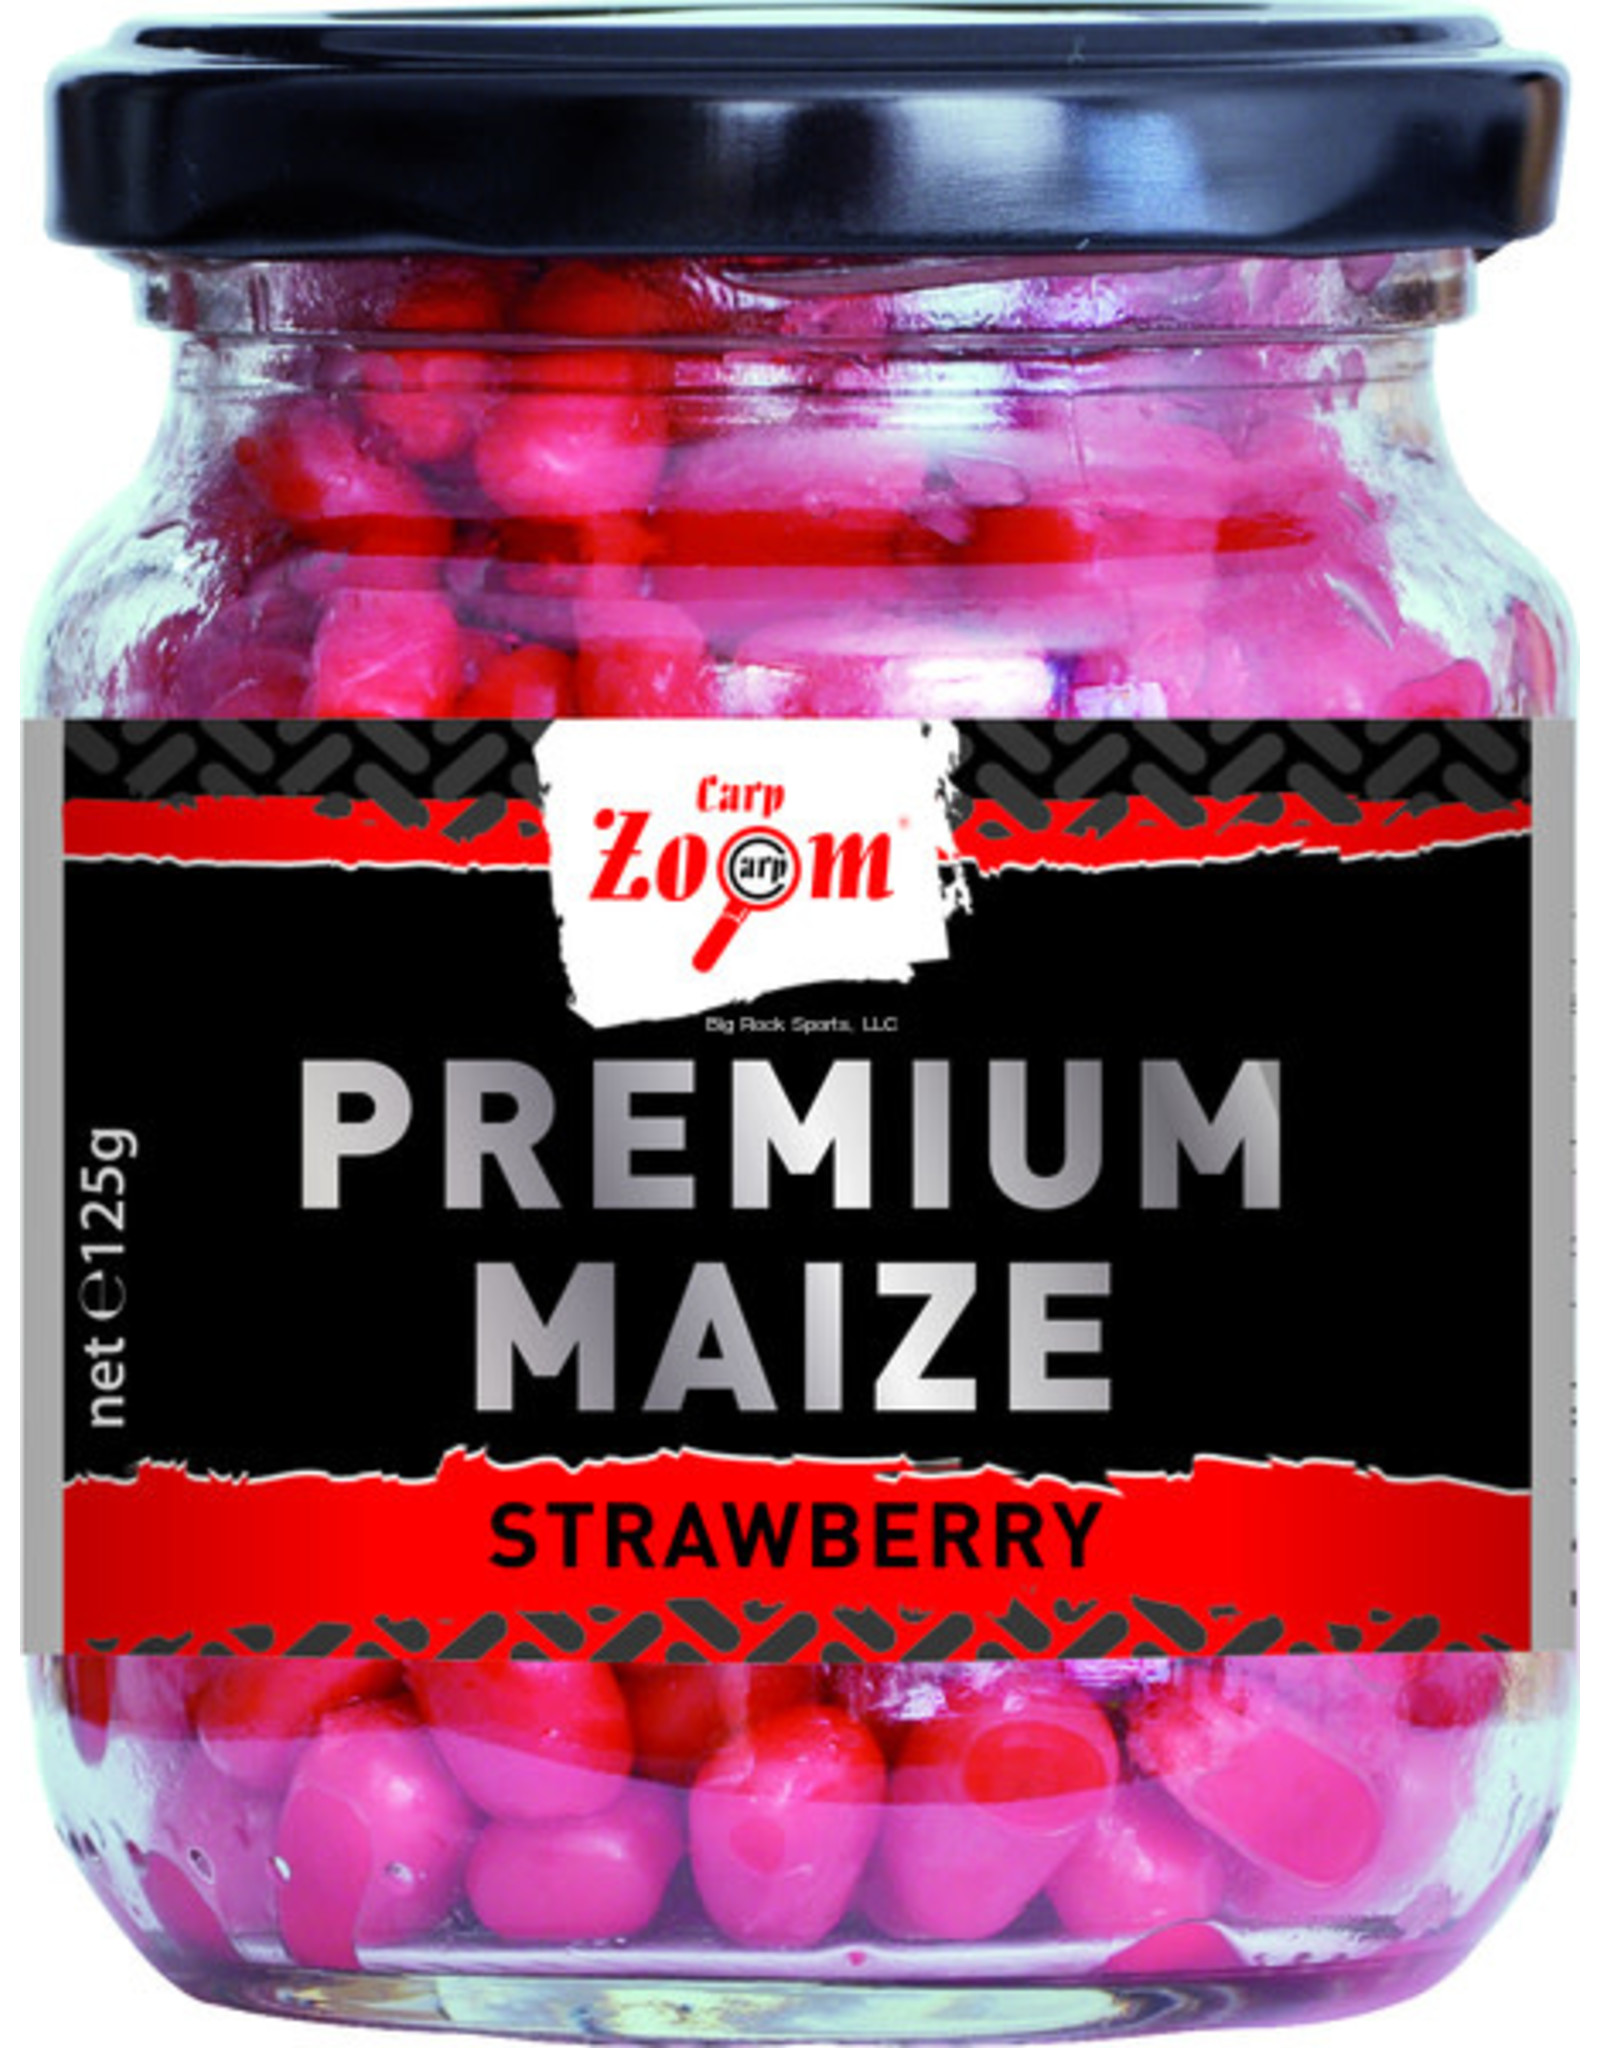 Carp Zoom CZ1277 Premium Maize, 220 ml (125g) strawberry